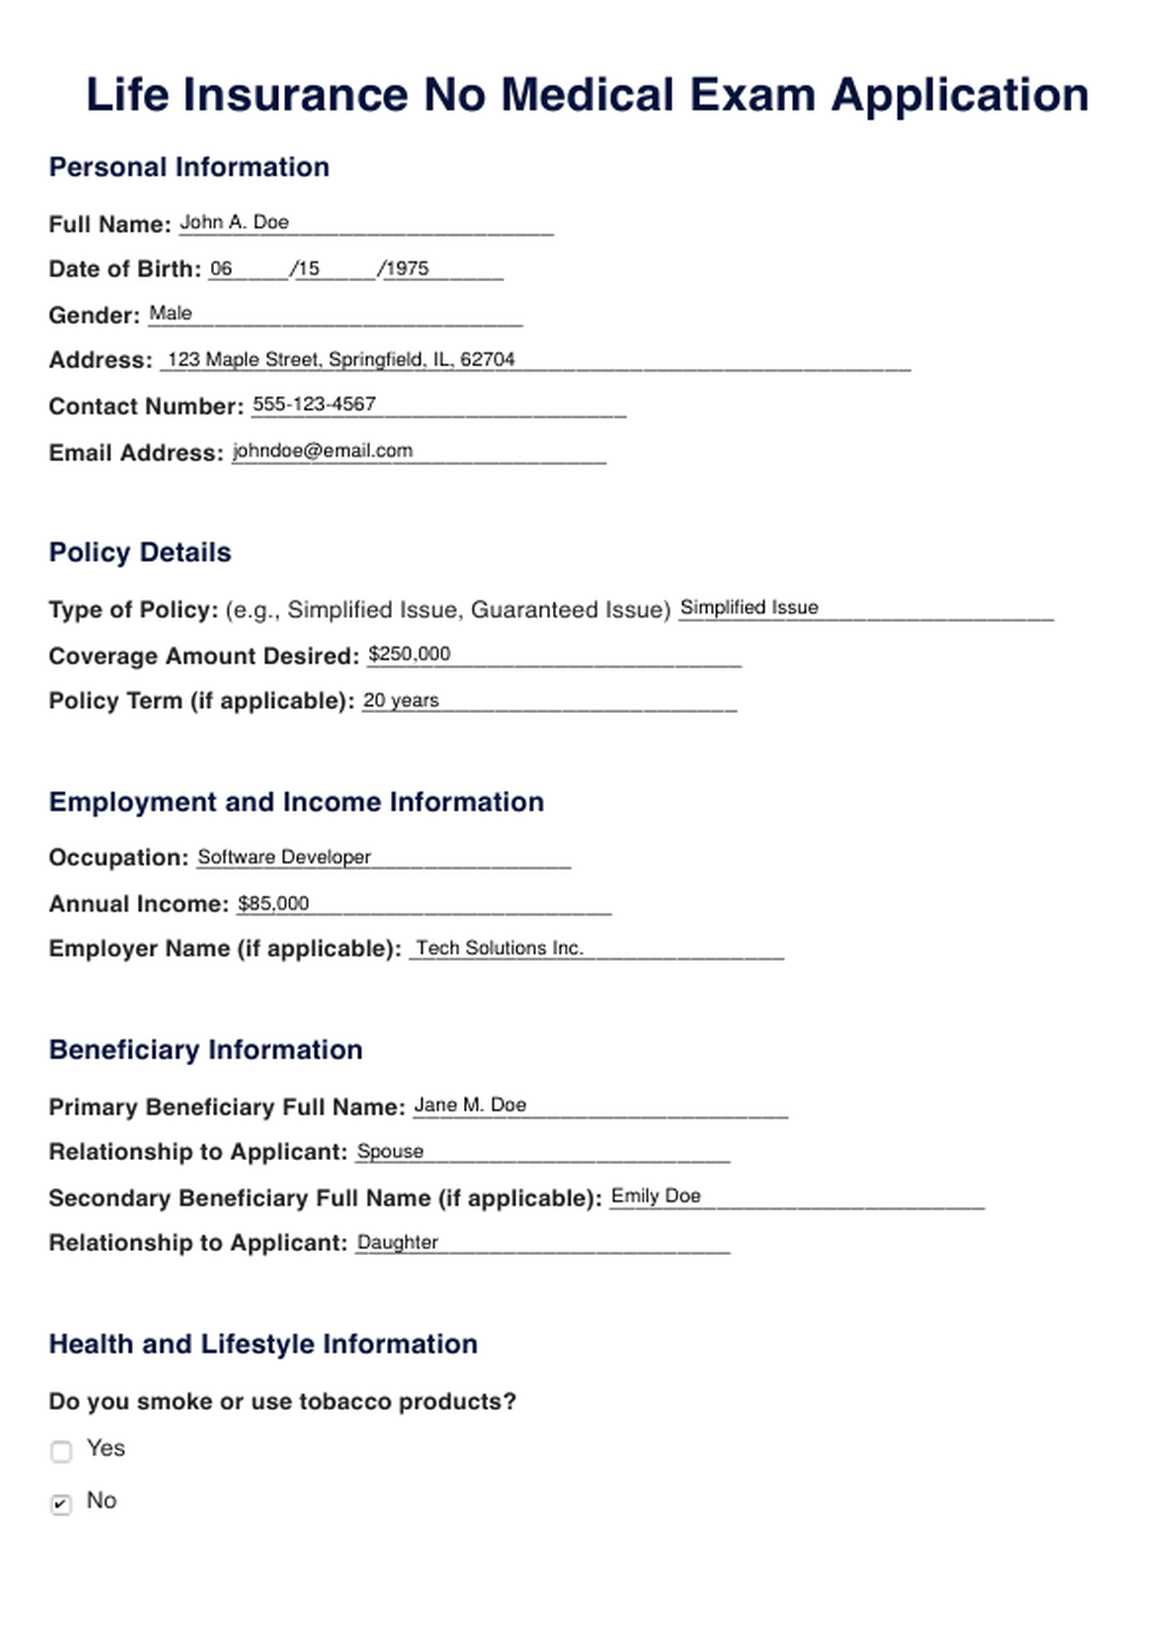 Life Insurance No Medical Exam PDF Example